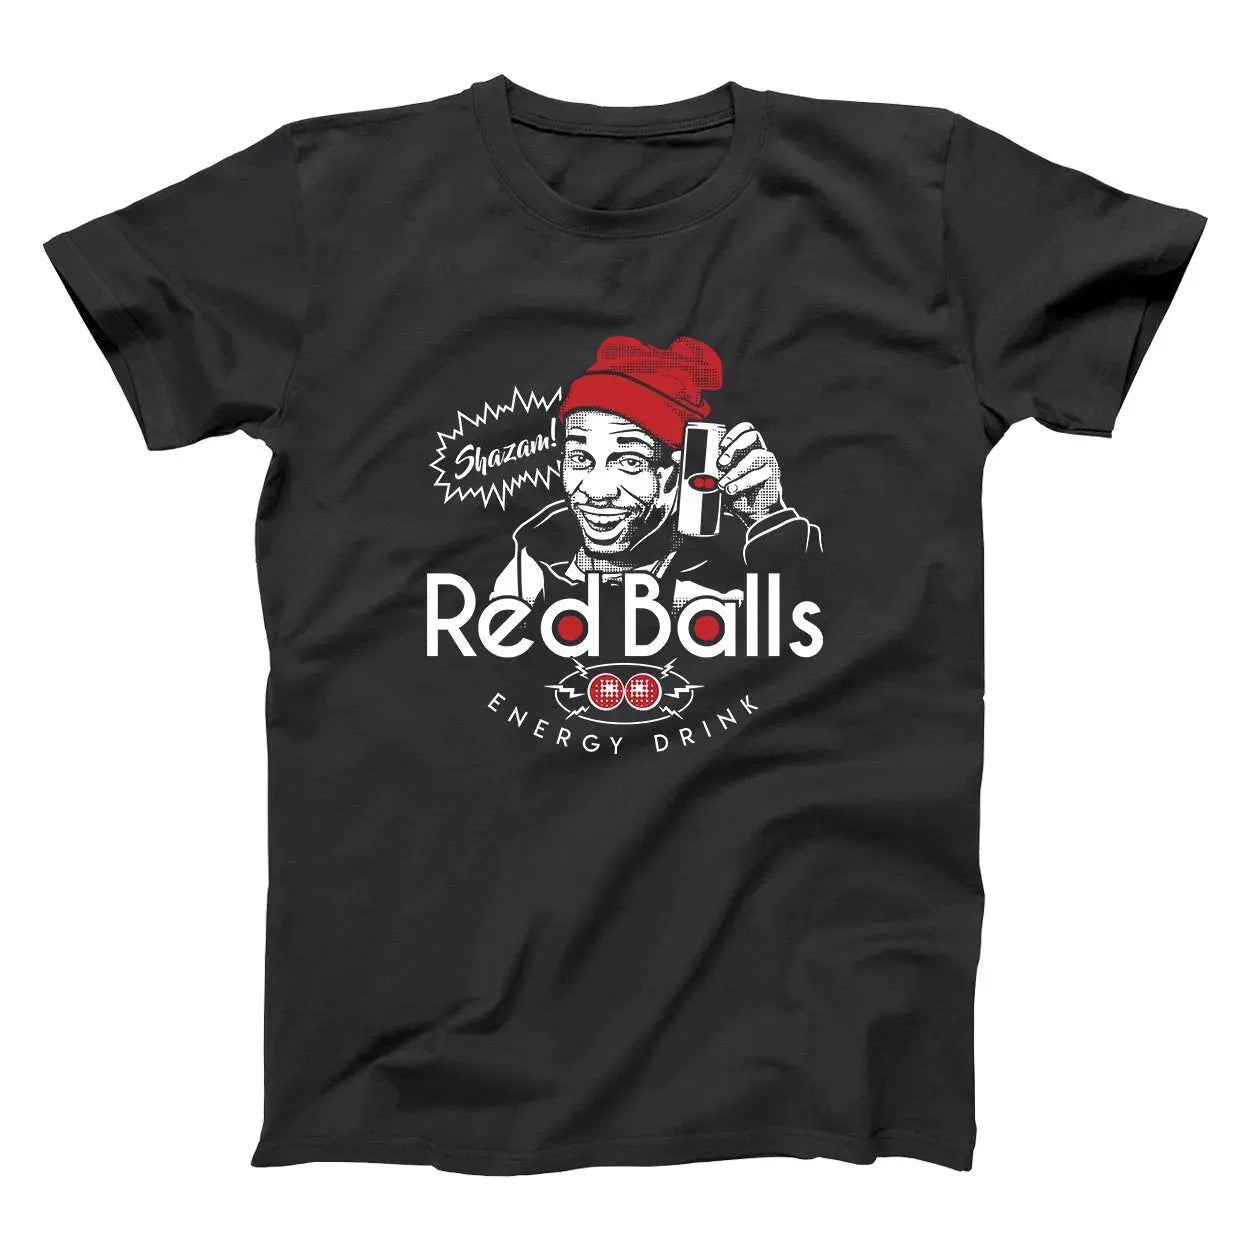 Red Balls Energy Drink Tshirt - Donkey Tees